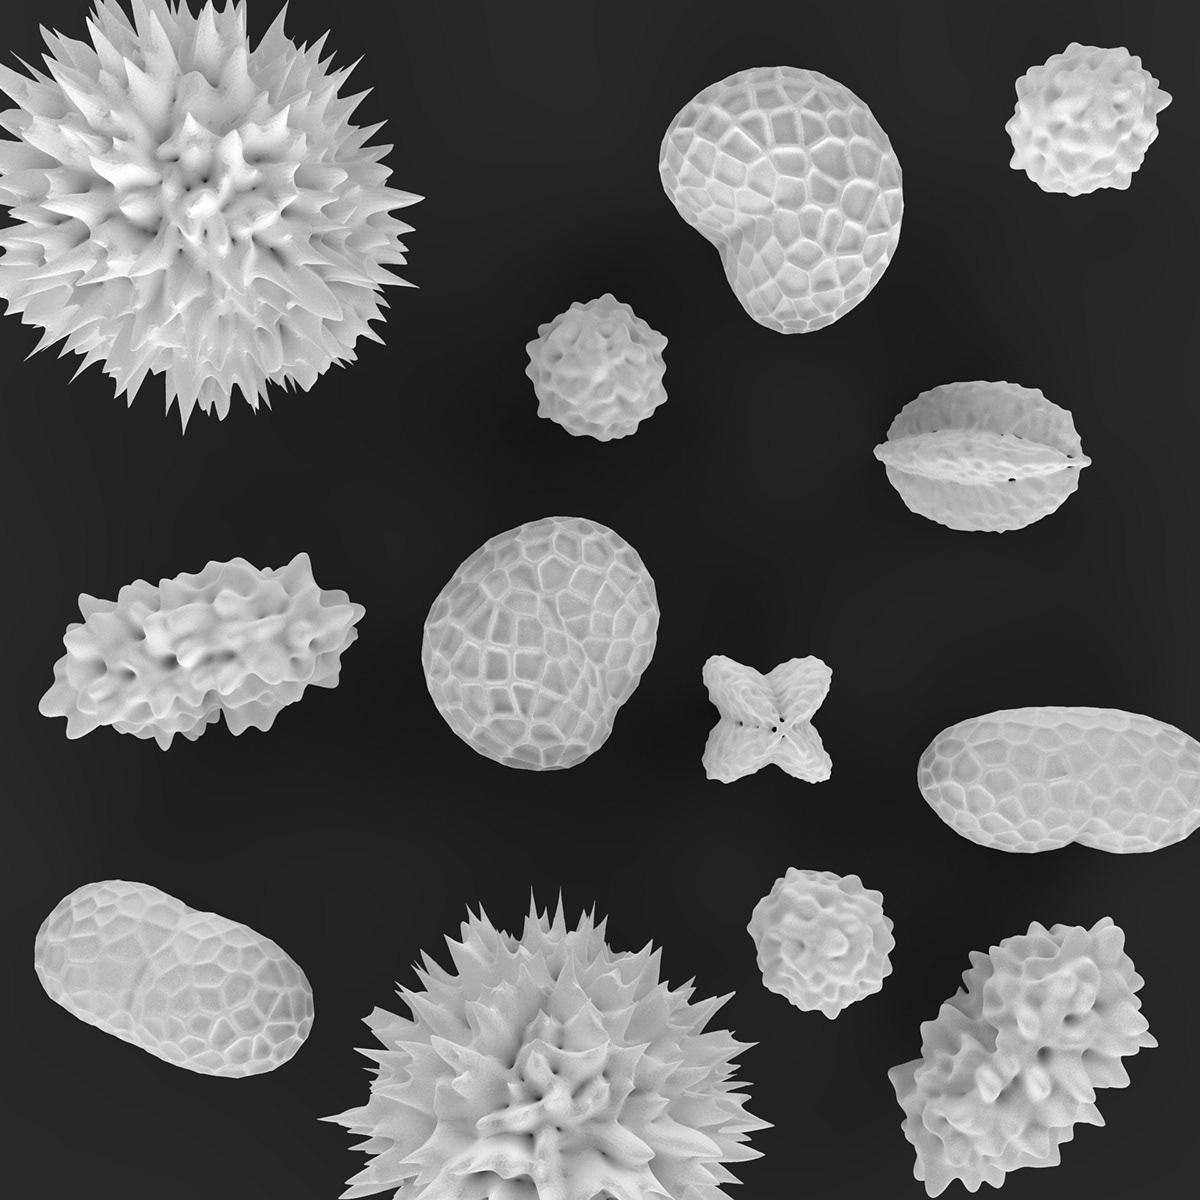 biomimicry biomimetic 3d print Nature